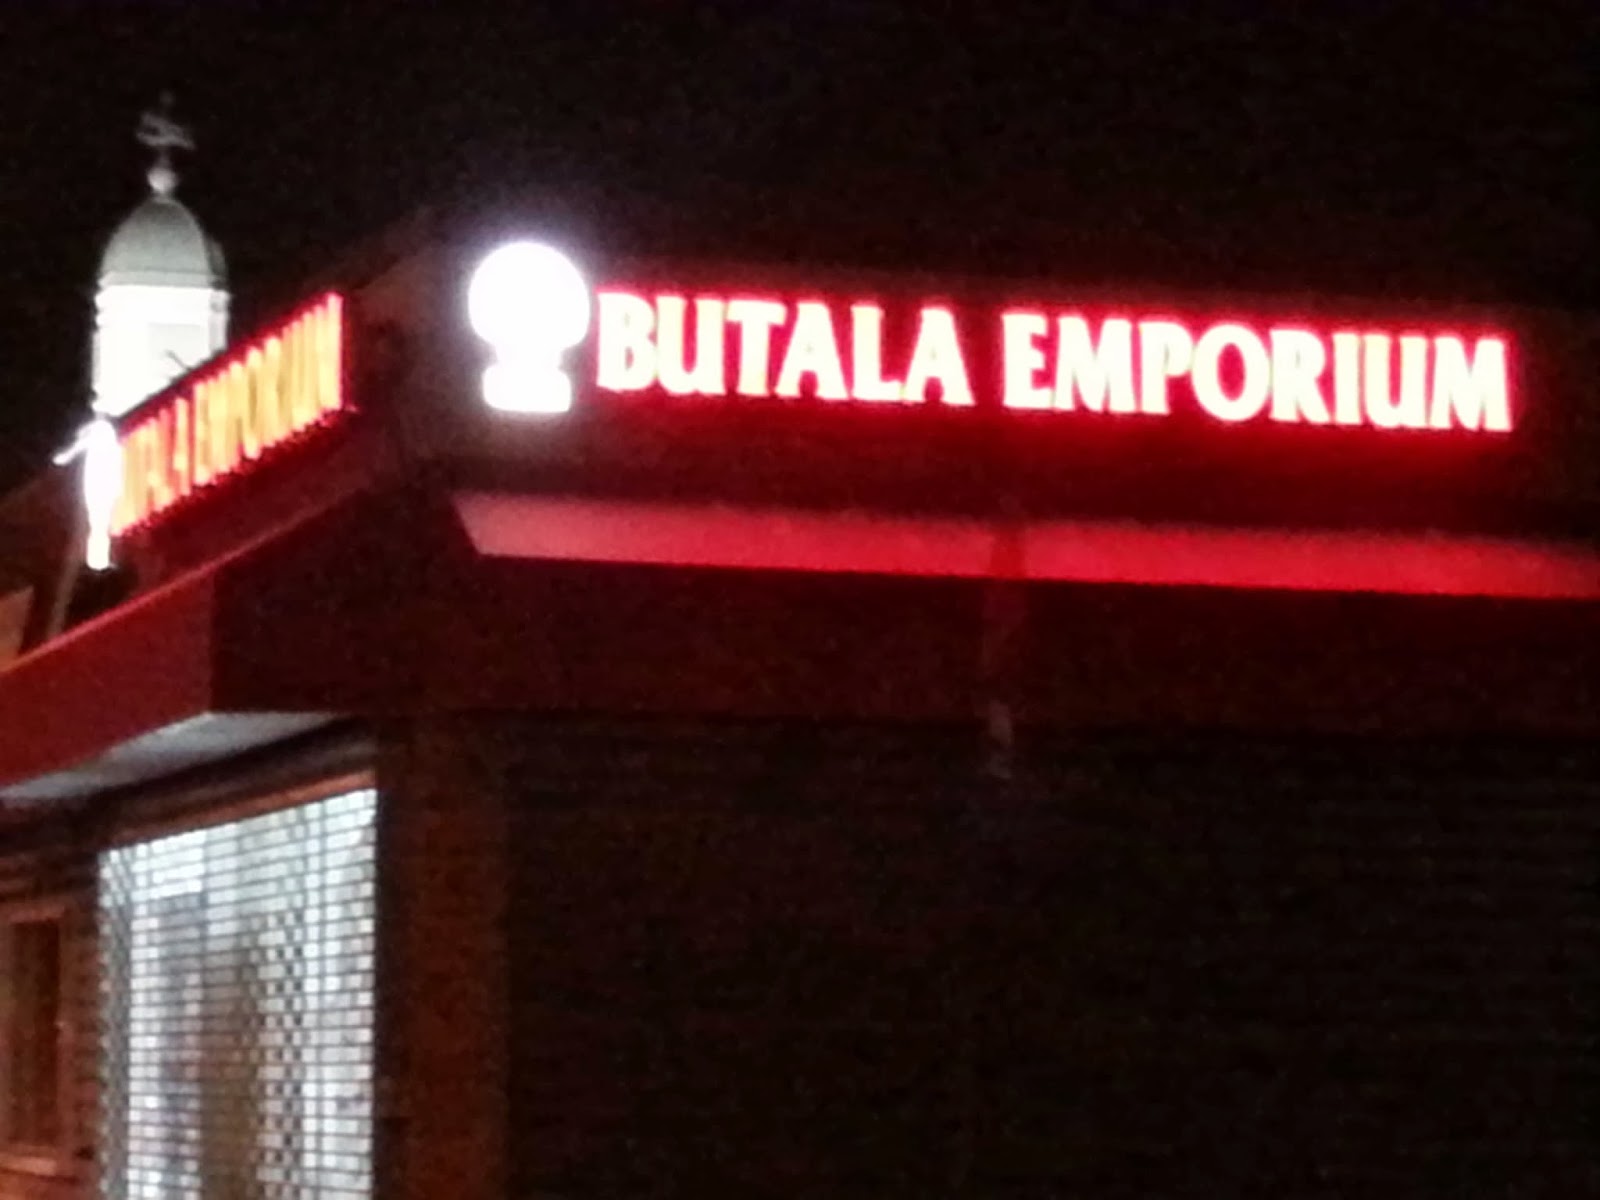 Photo of Butala Emporium Inc in Glen Oaks City, New York, United States - 1 Picture of Point of interest, Establishment, Store